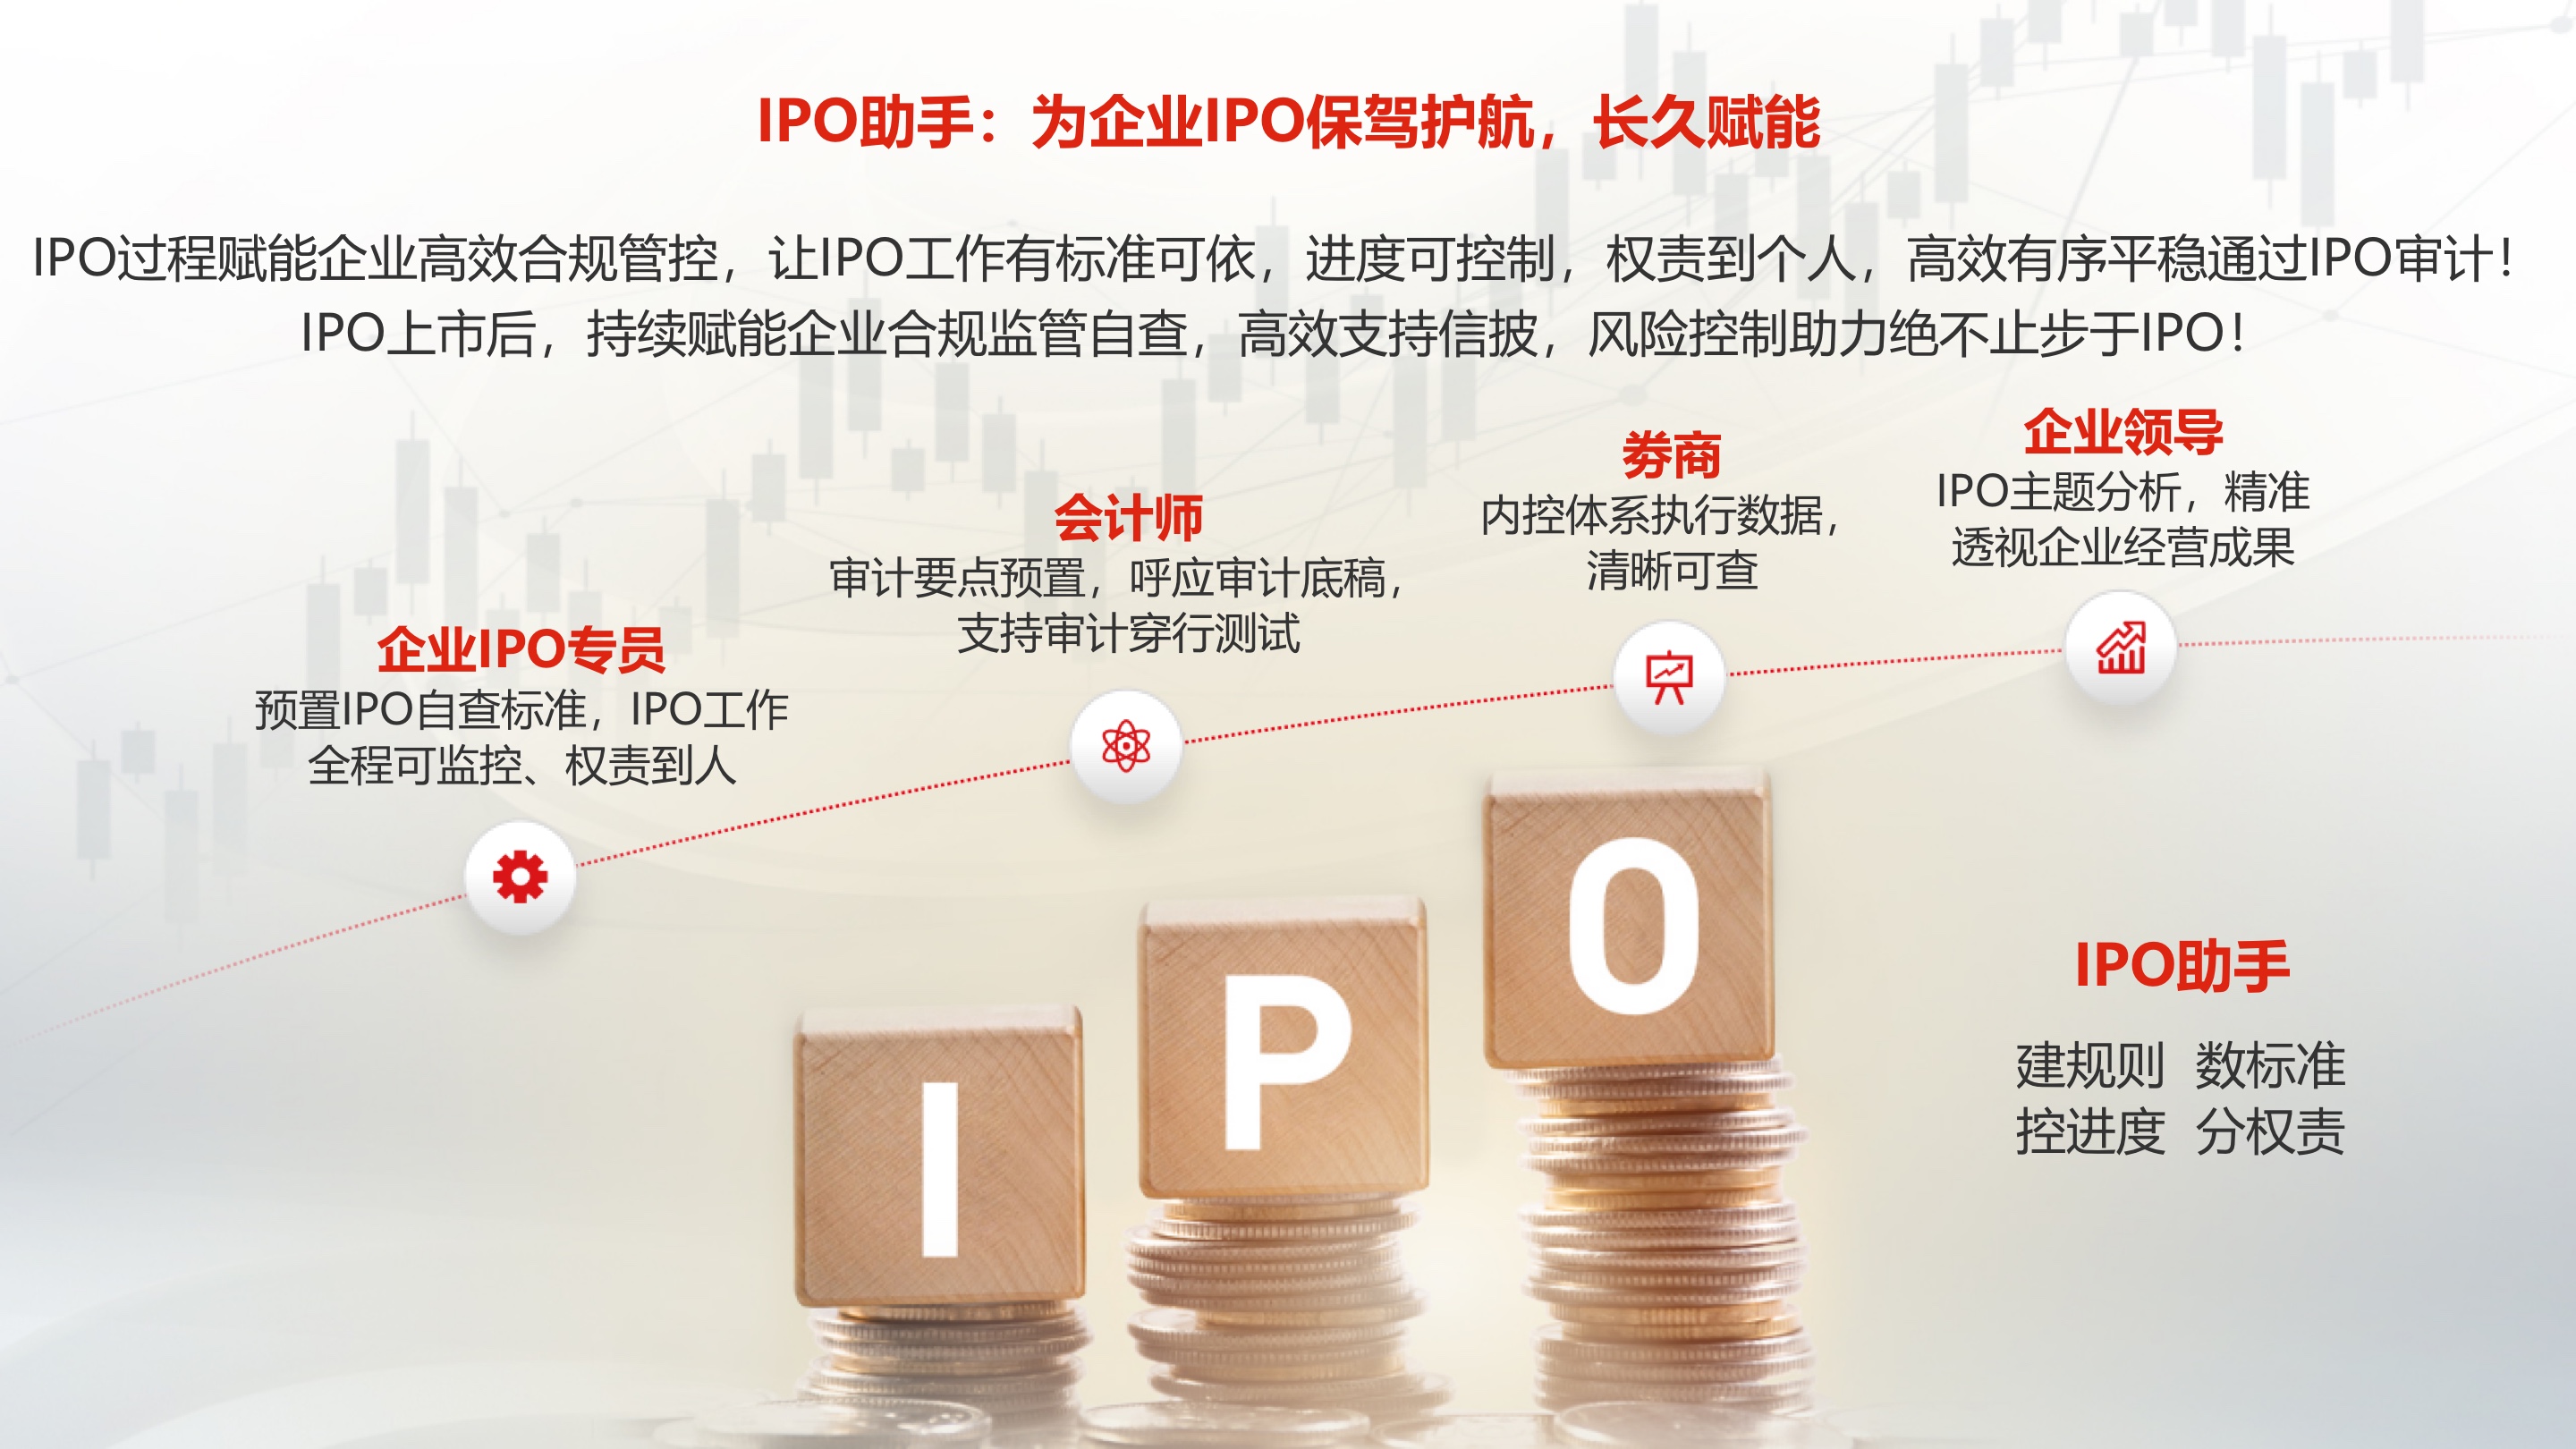 IPO助手：為企業IPO保駕護航，長久賦能